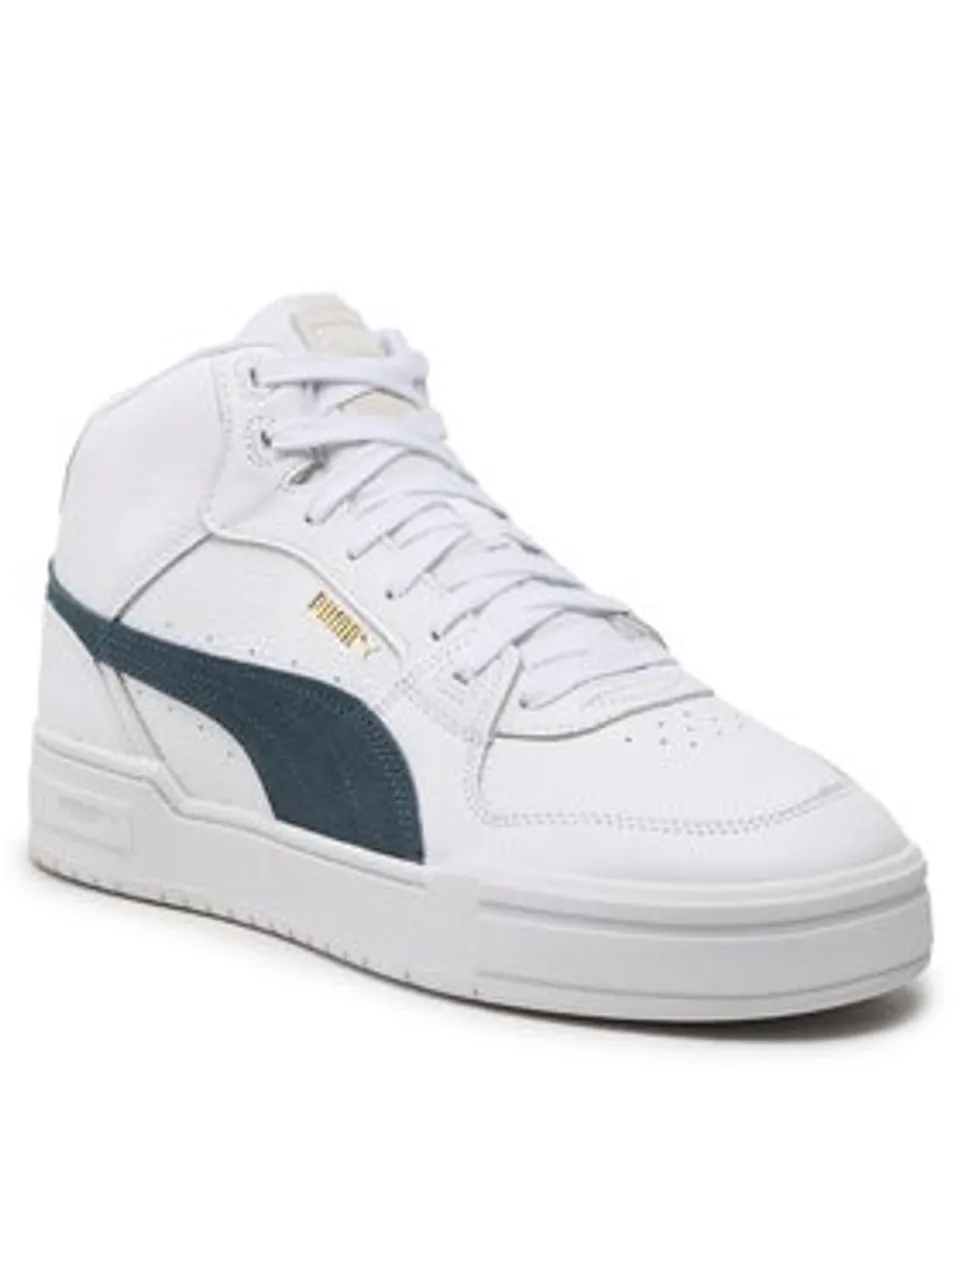 Puma Sneakers Ca Pro Mid Heritage 387487 03 Weiß